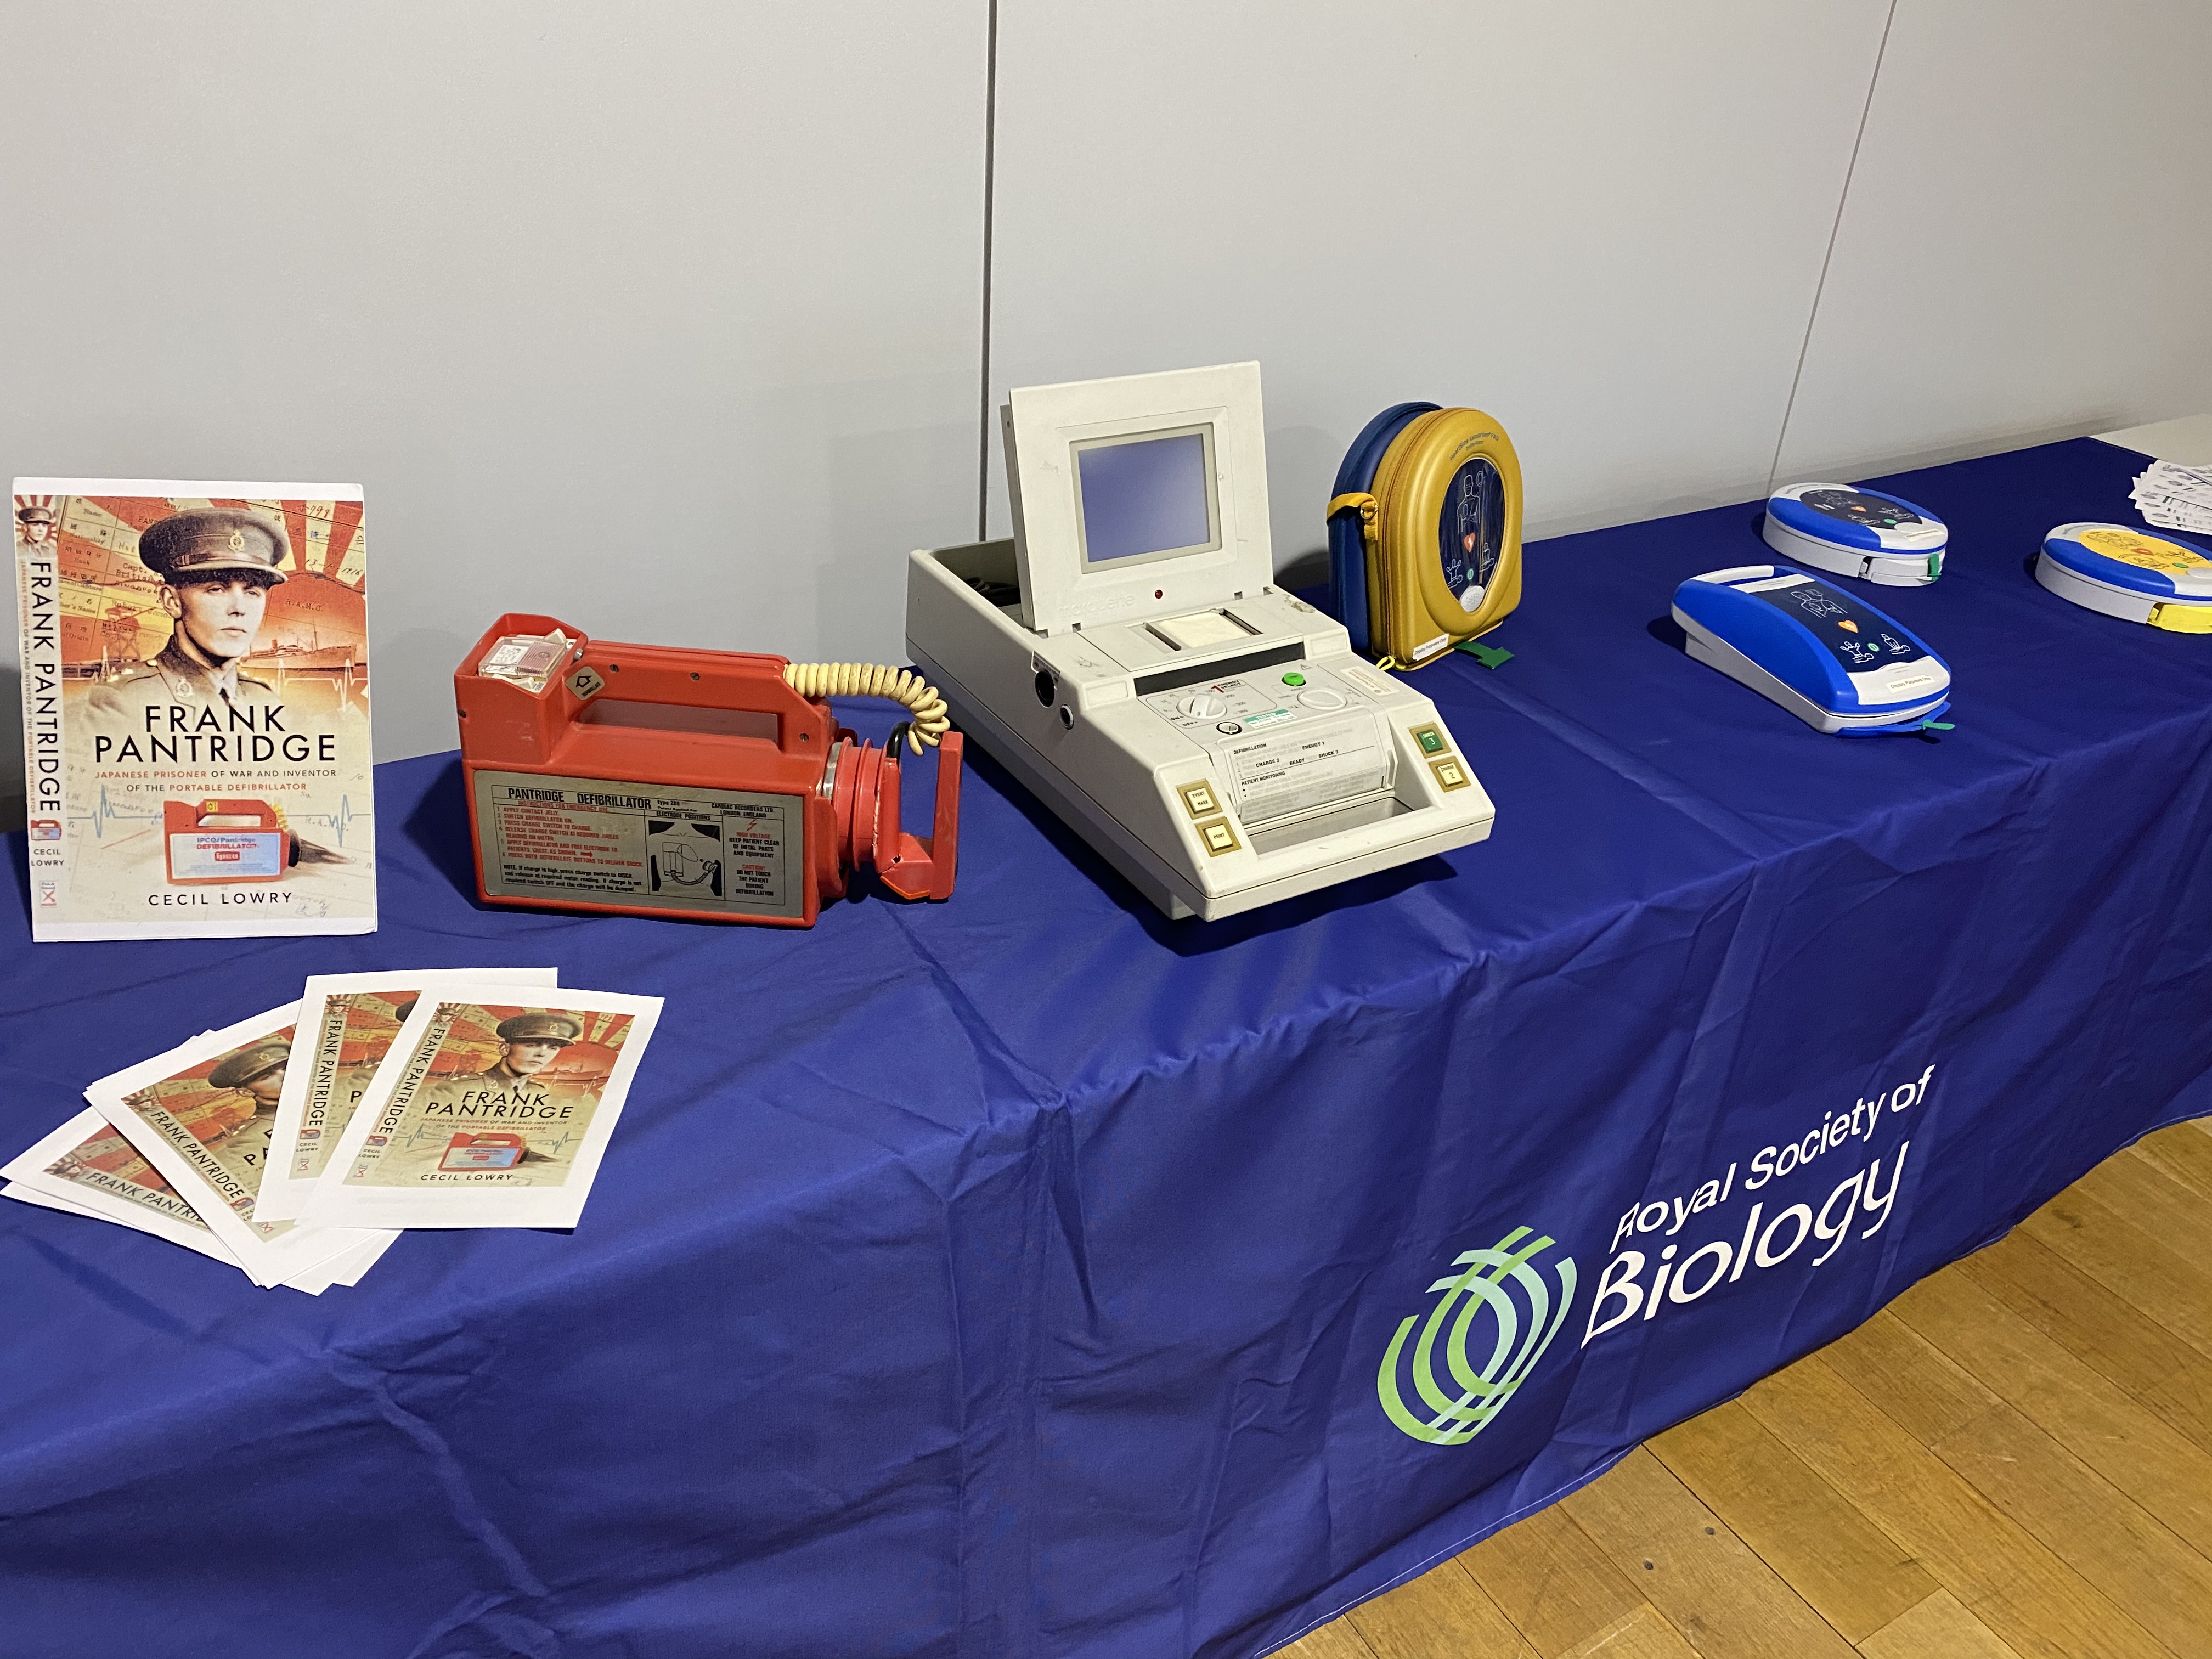 Prototypes of various portable defibrillator models